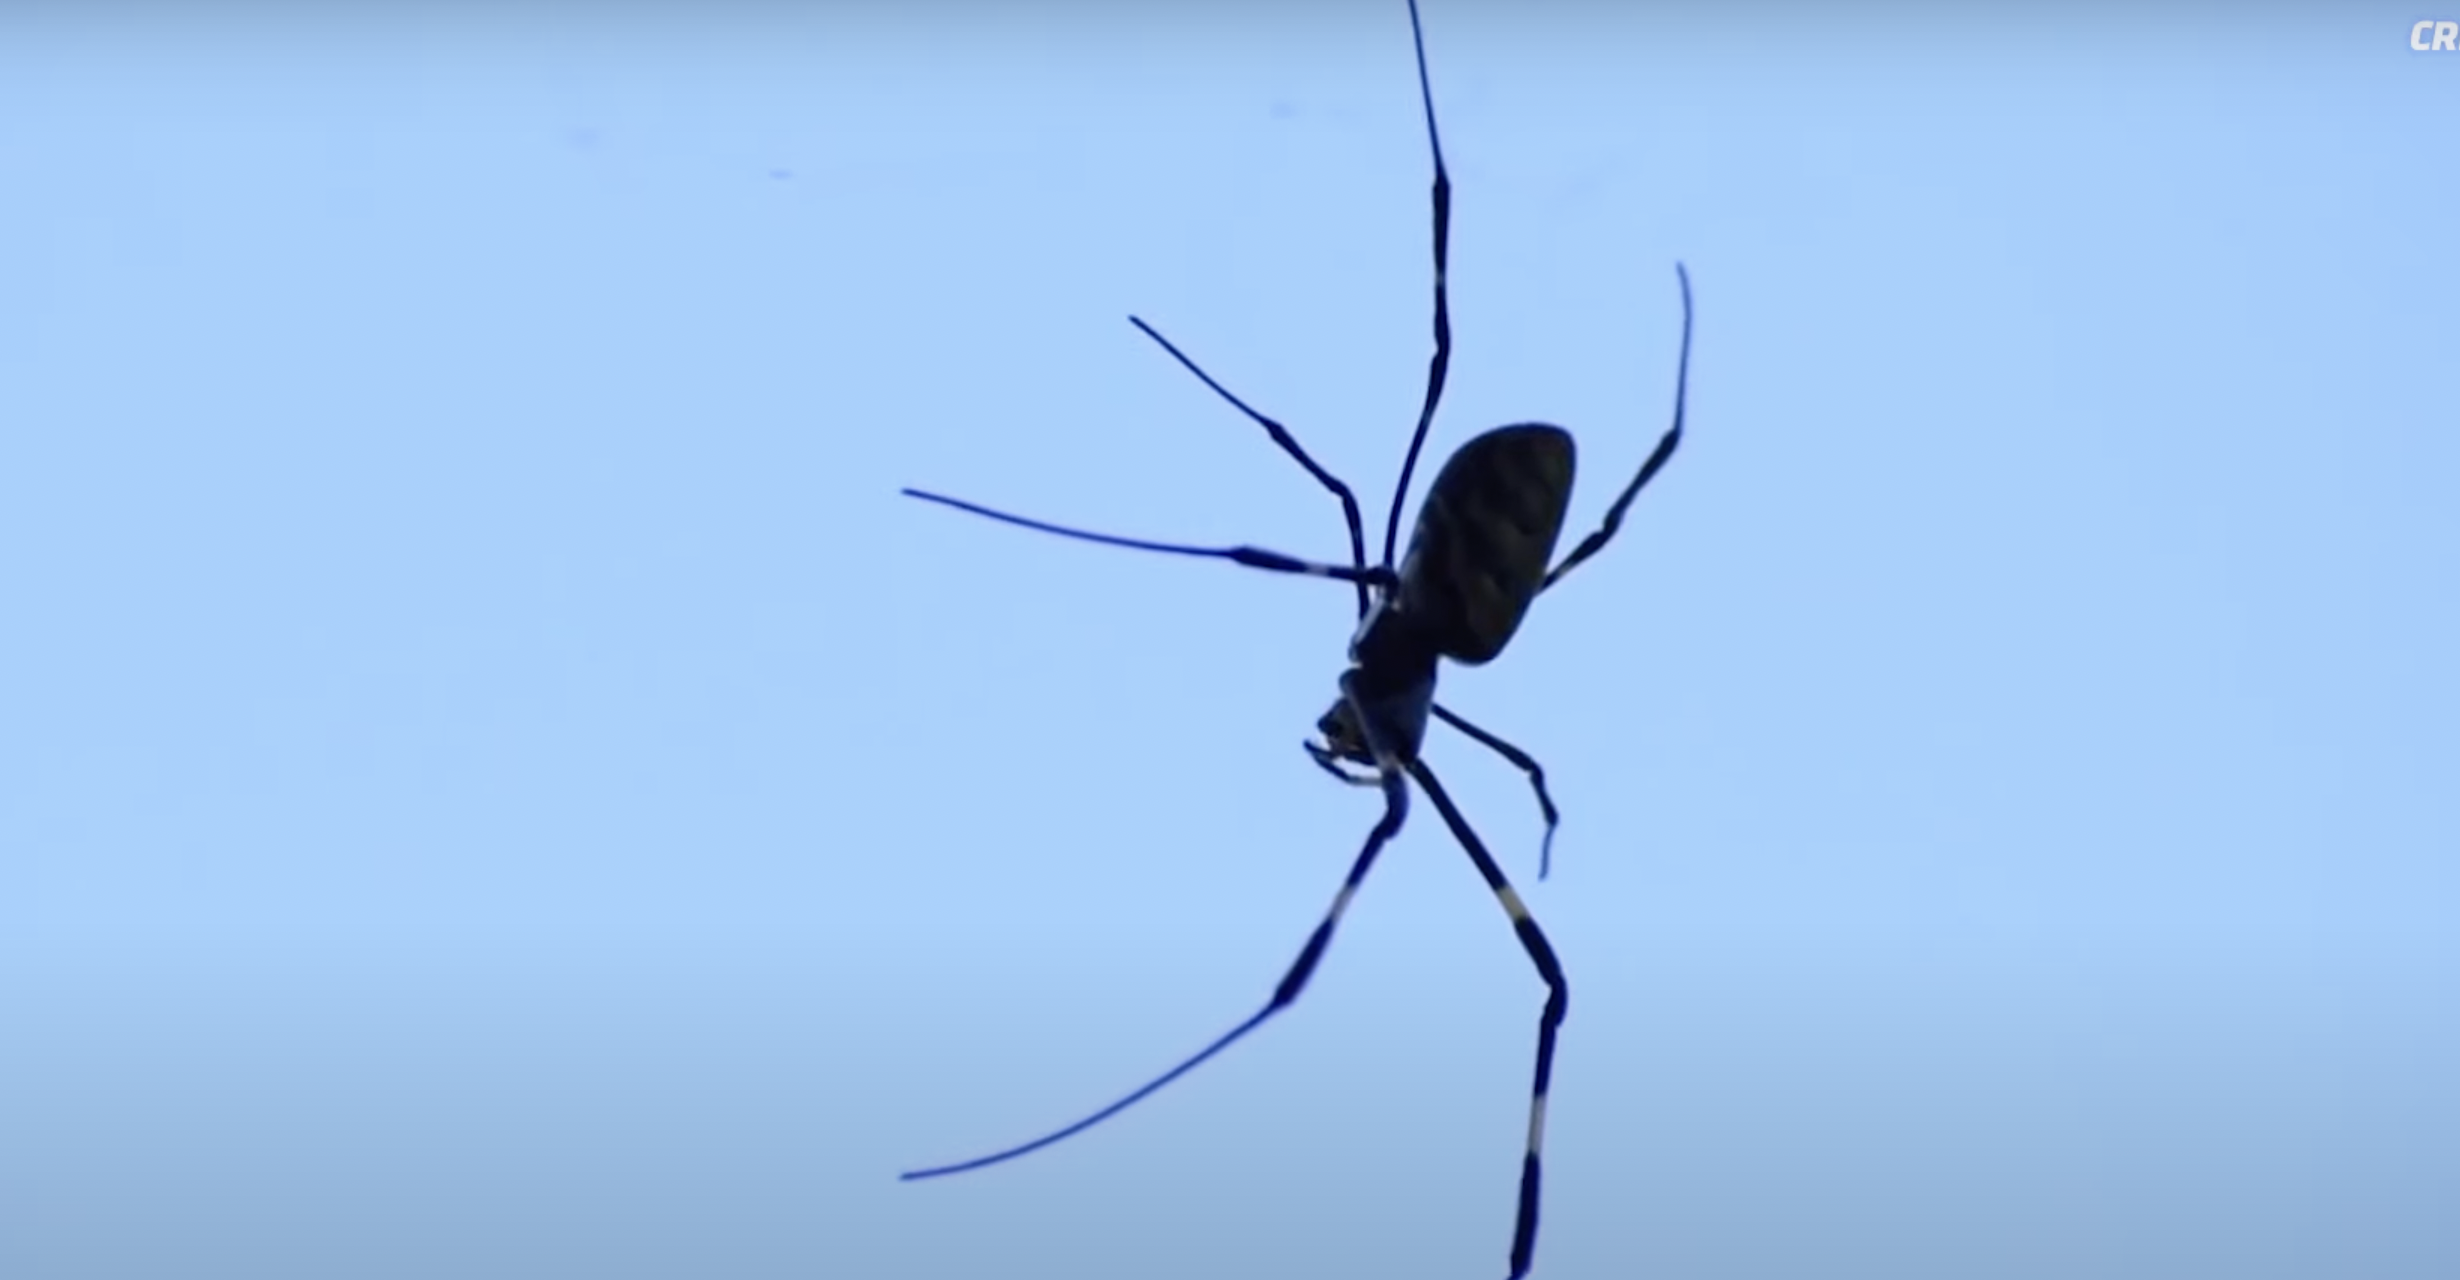 Giant Venomous Flying Spiders Invading New York